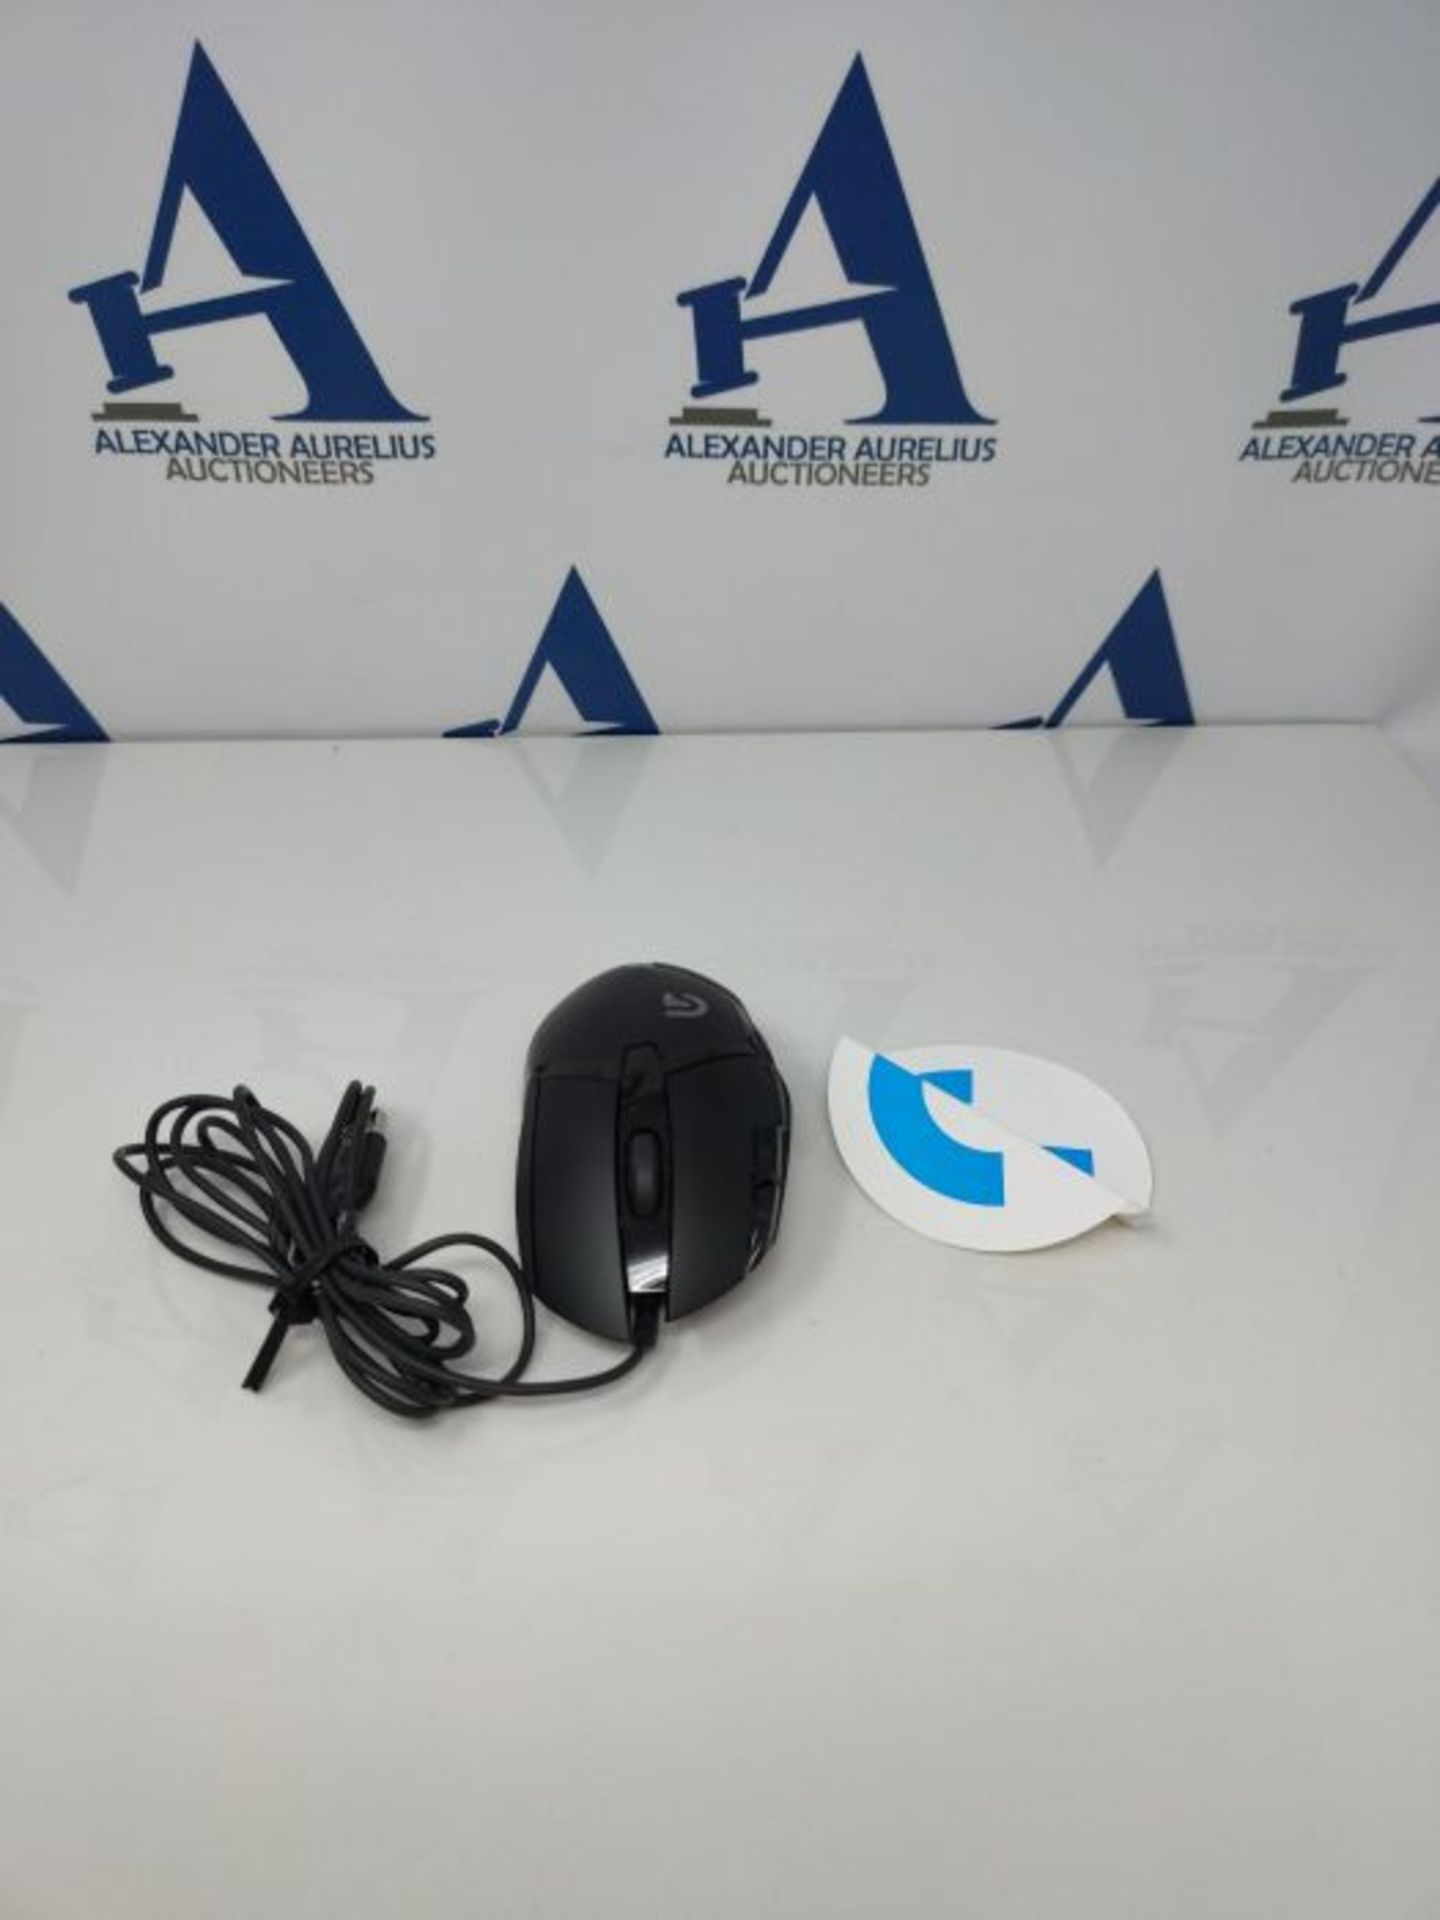 Logitech G402 HERO High Performance Wired Gaming Mouse, HERO 25K Sensor, 25,600 DPI, R - Image 3 of 3